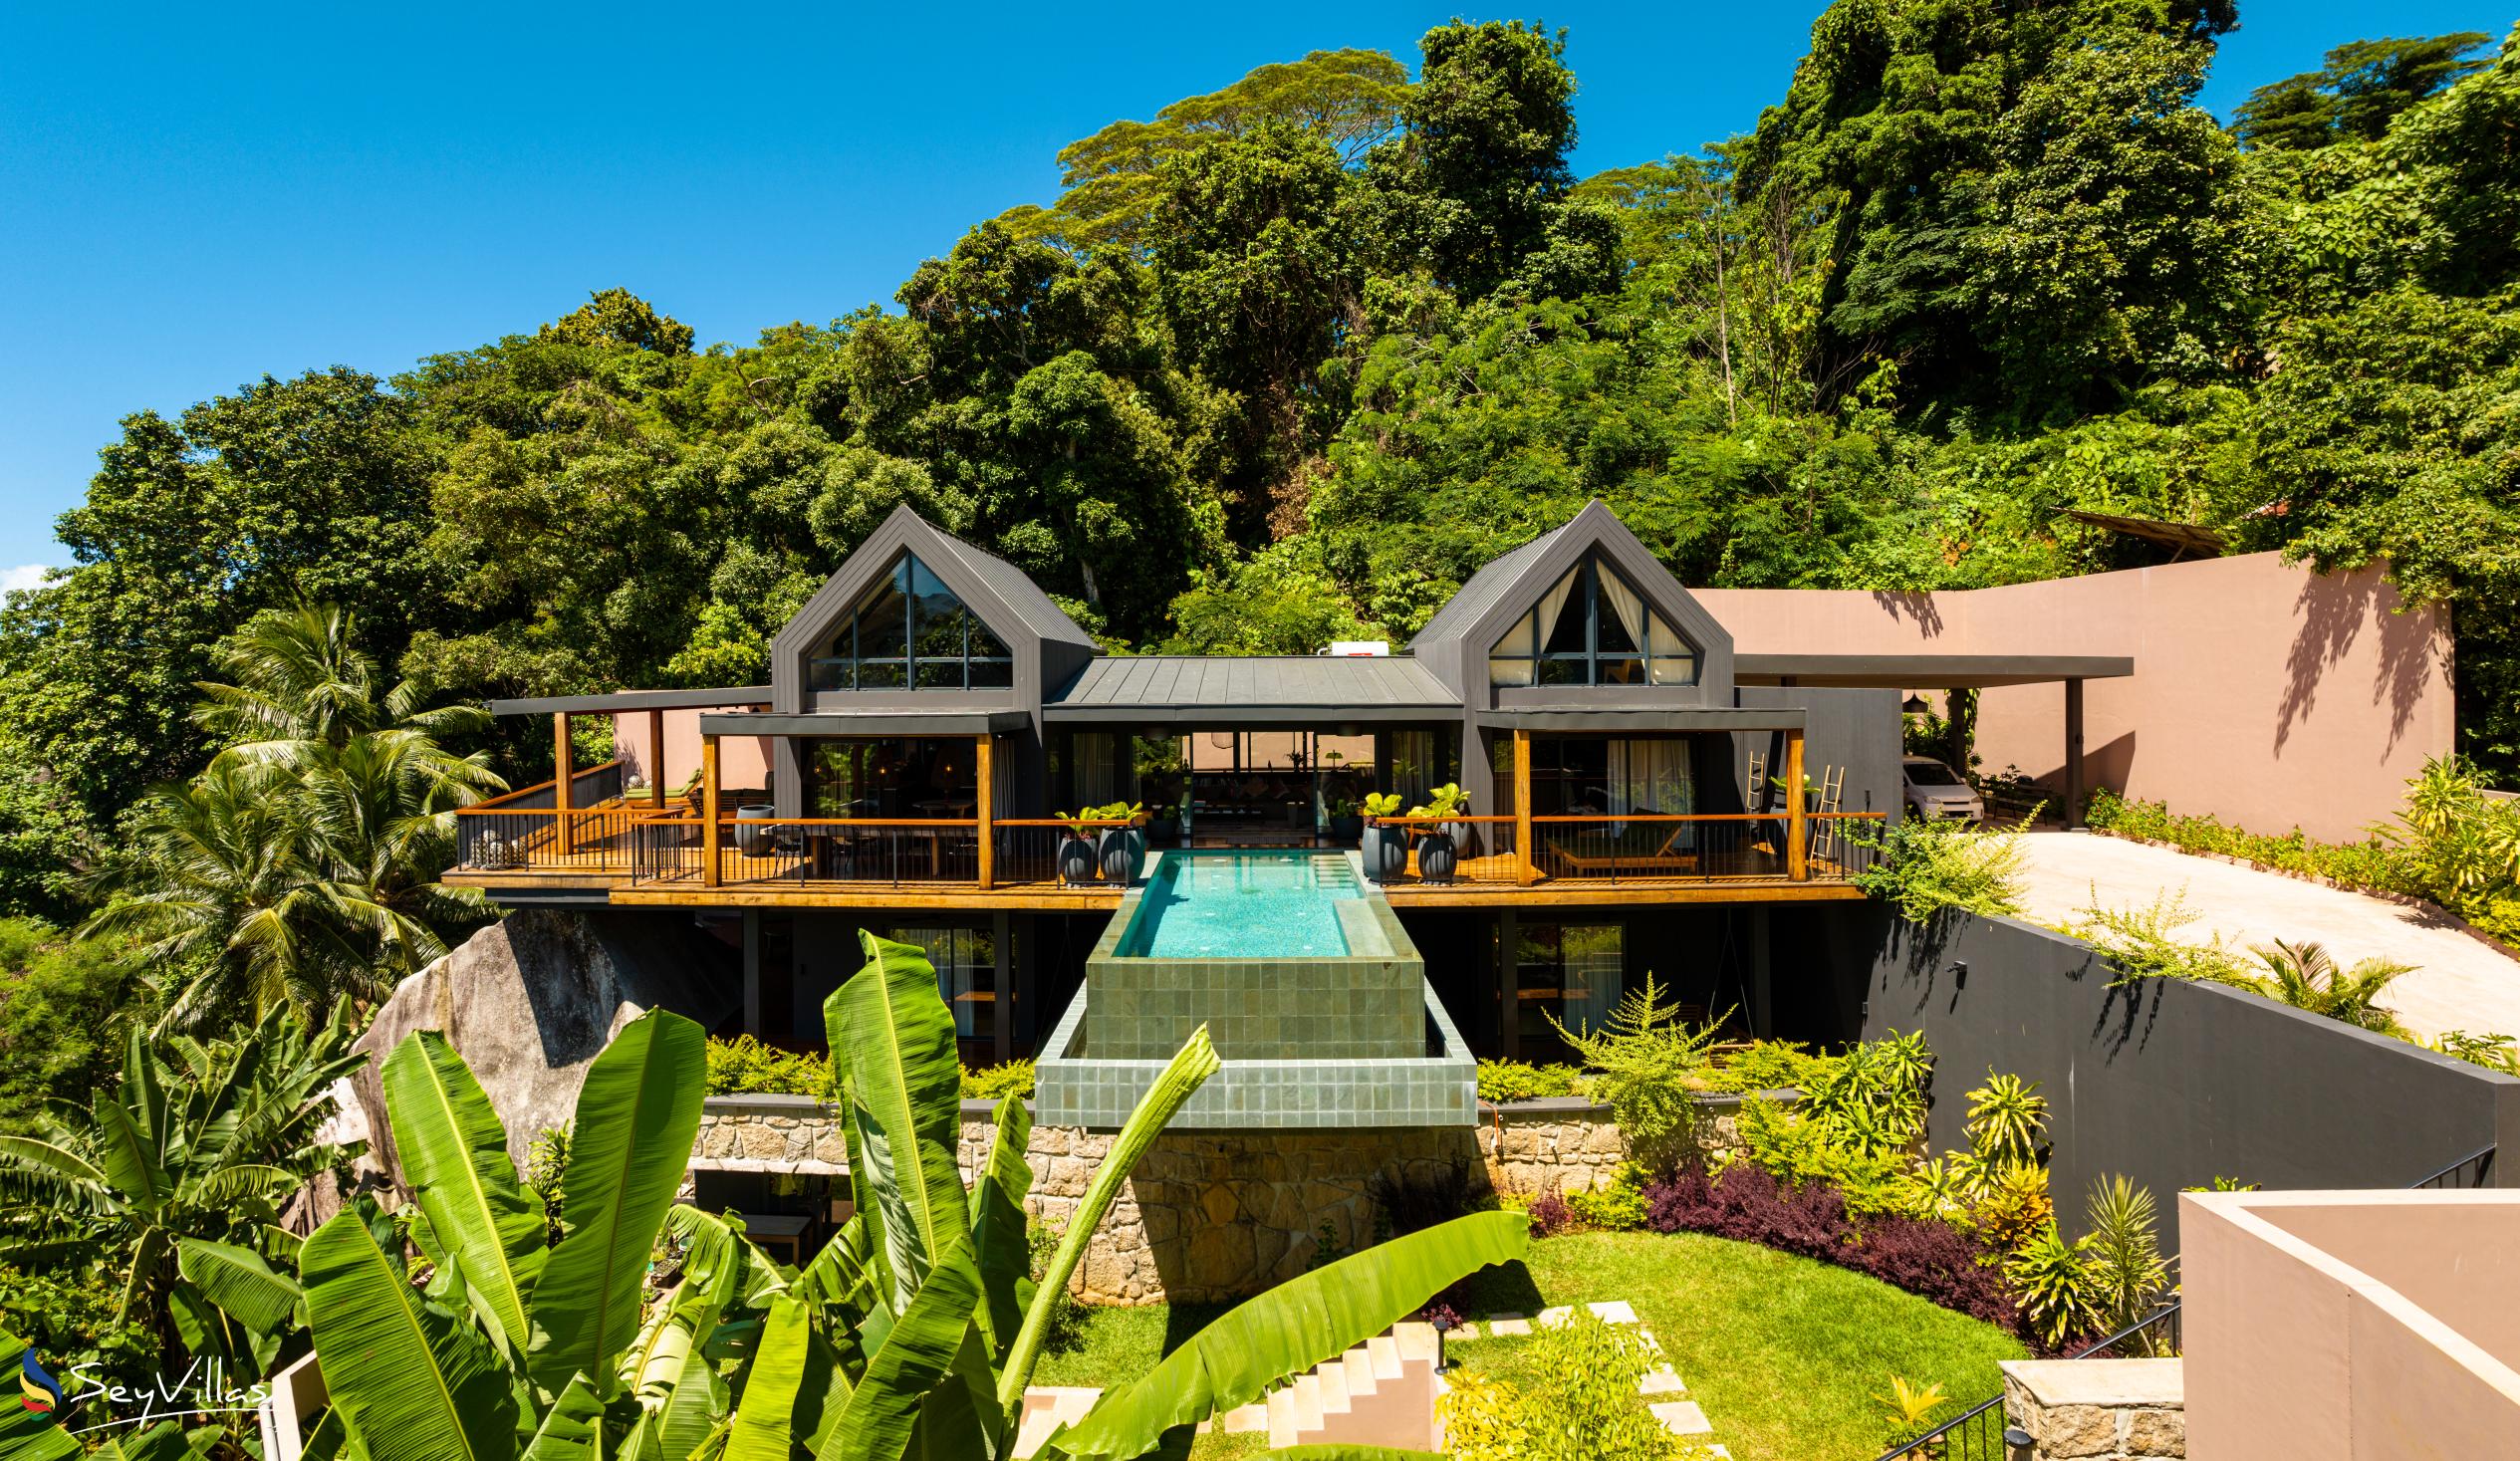 Photo 8: Maison Gaia - Outdoor area - Mahé (Seychelles)